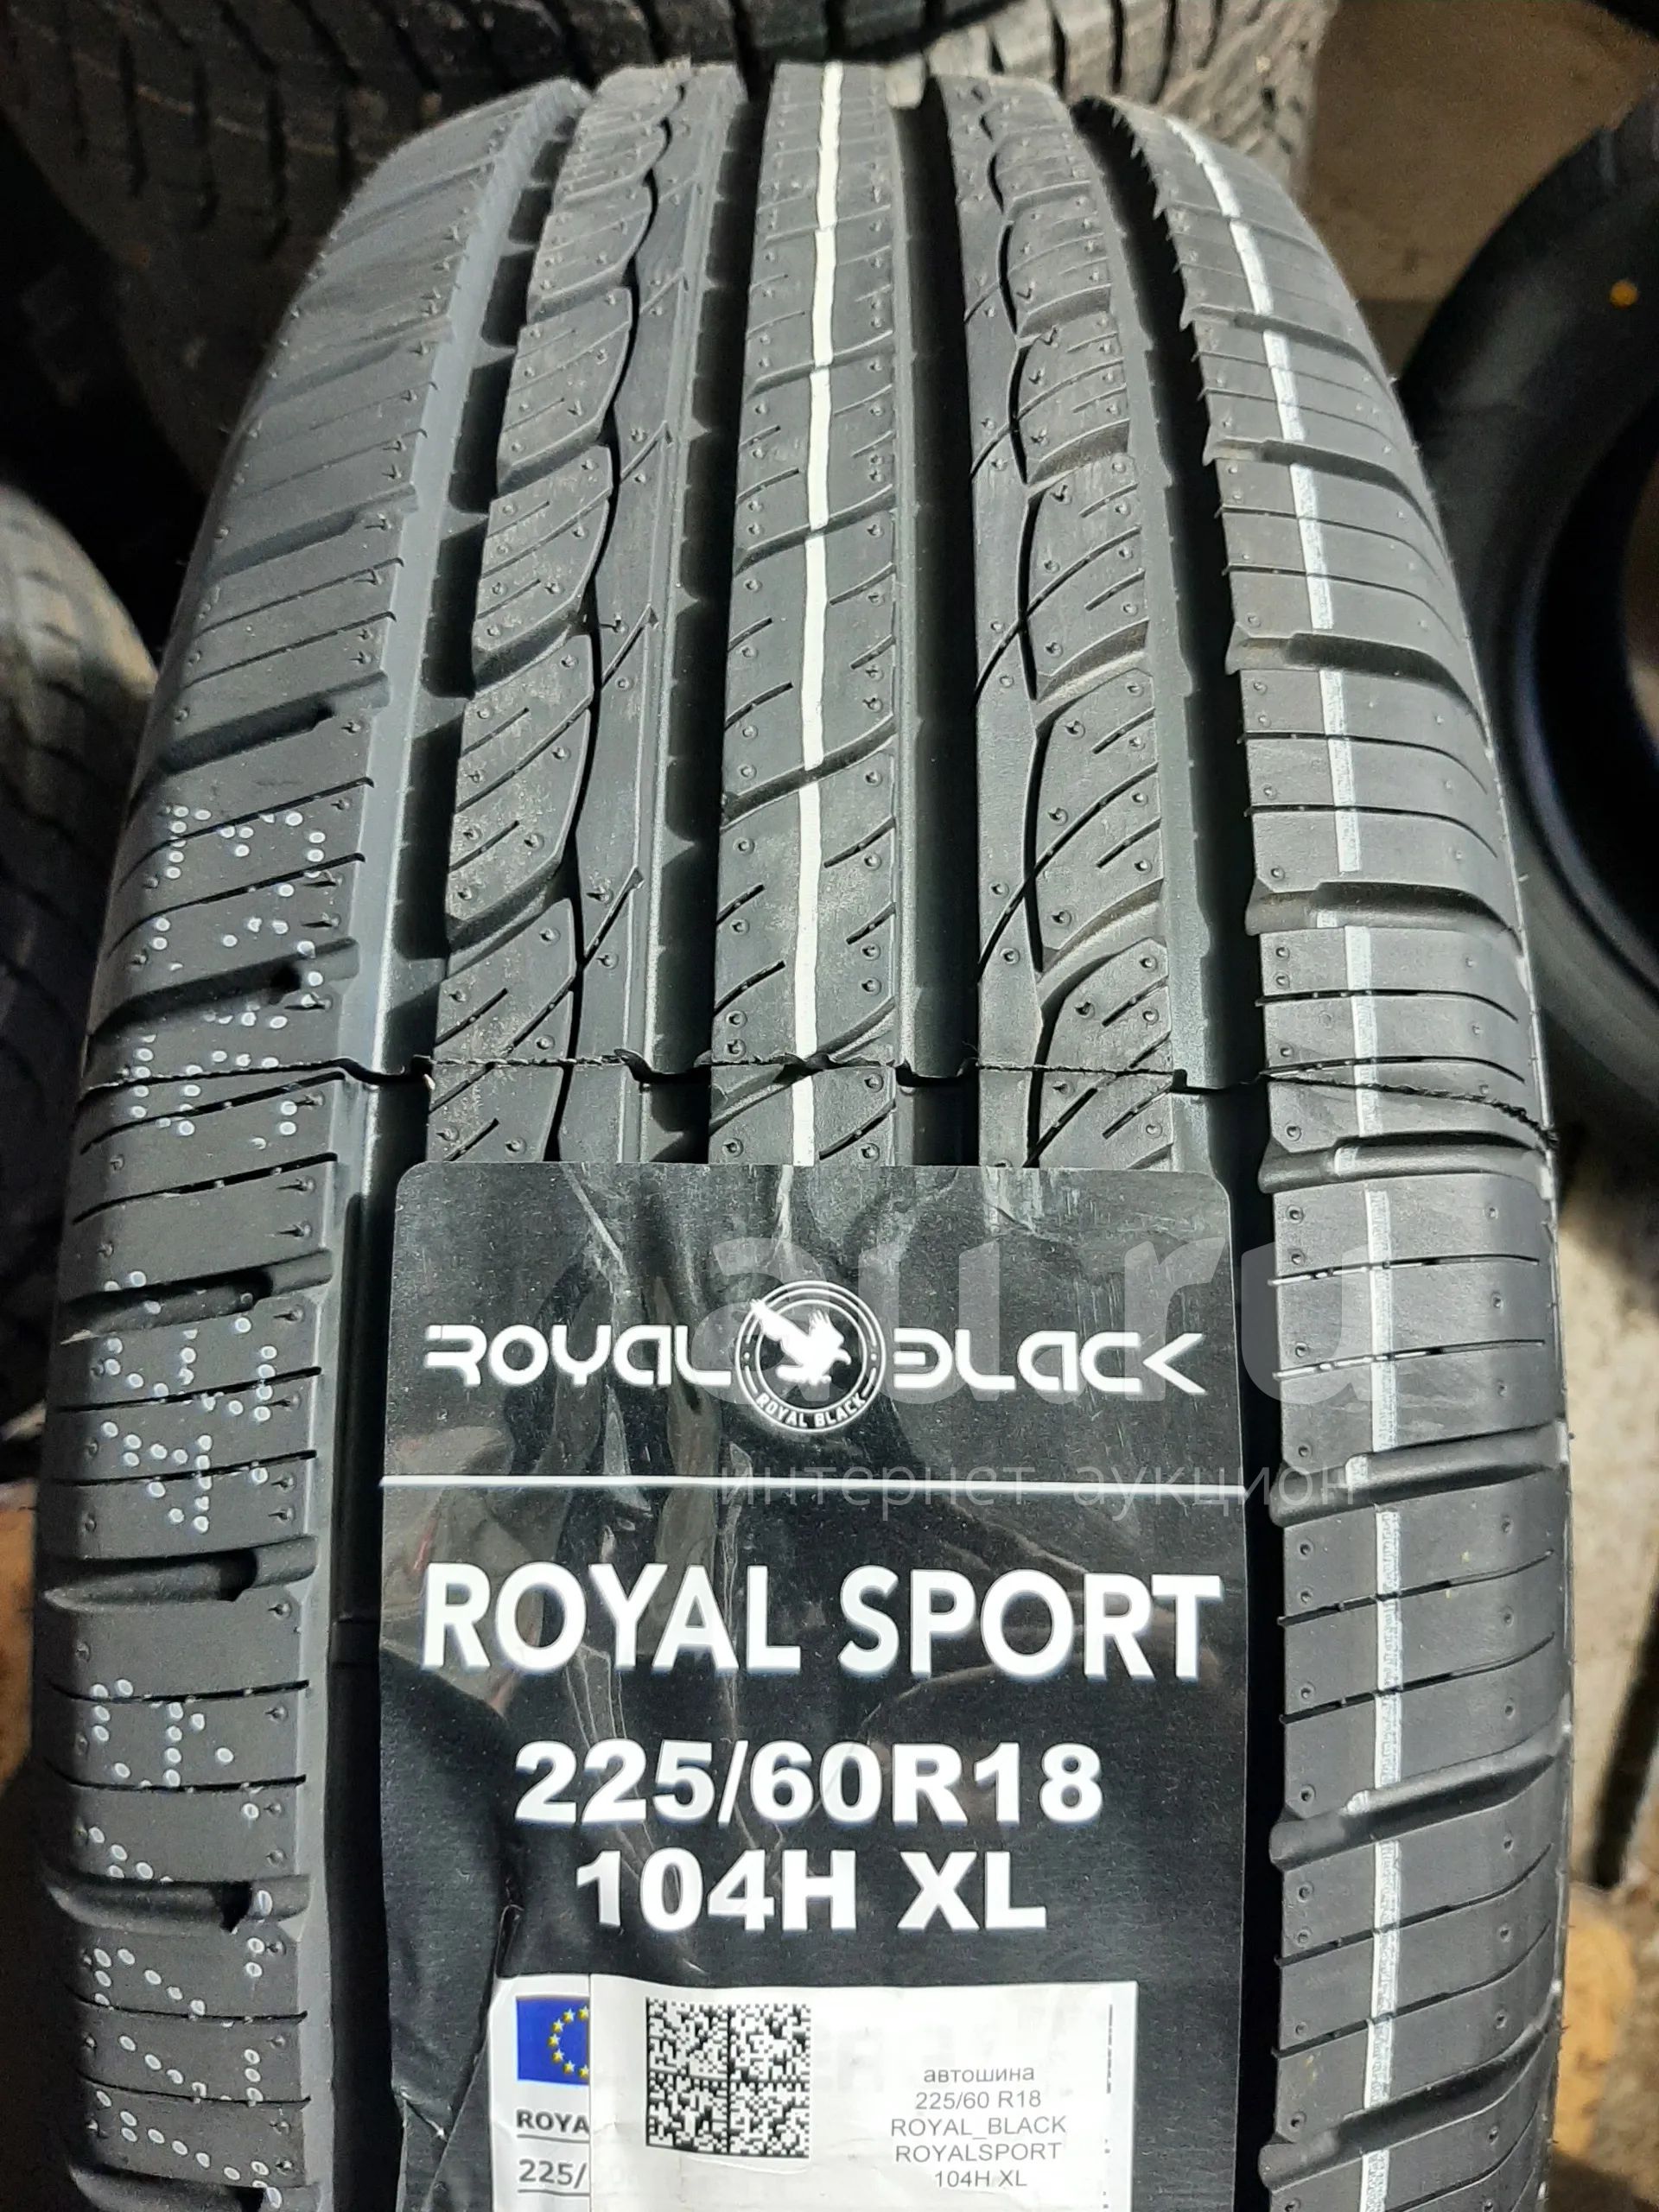 Автошина Royal Black ROYALSPORT 225/60 r17 99h. Шины Royal Black Royal Sport. Royal Black 225/55r18 Royal Sport 98h. Royal Black ROYALSPORT 104h XL отзывы. Шины royal sport